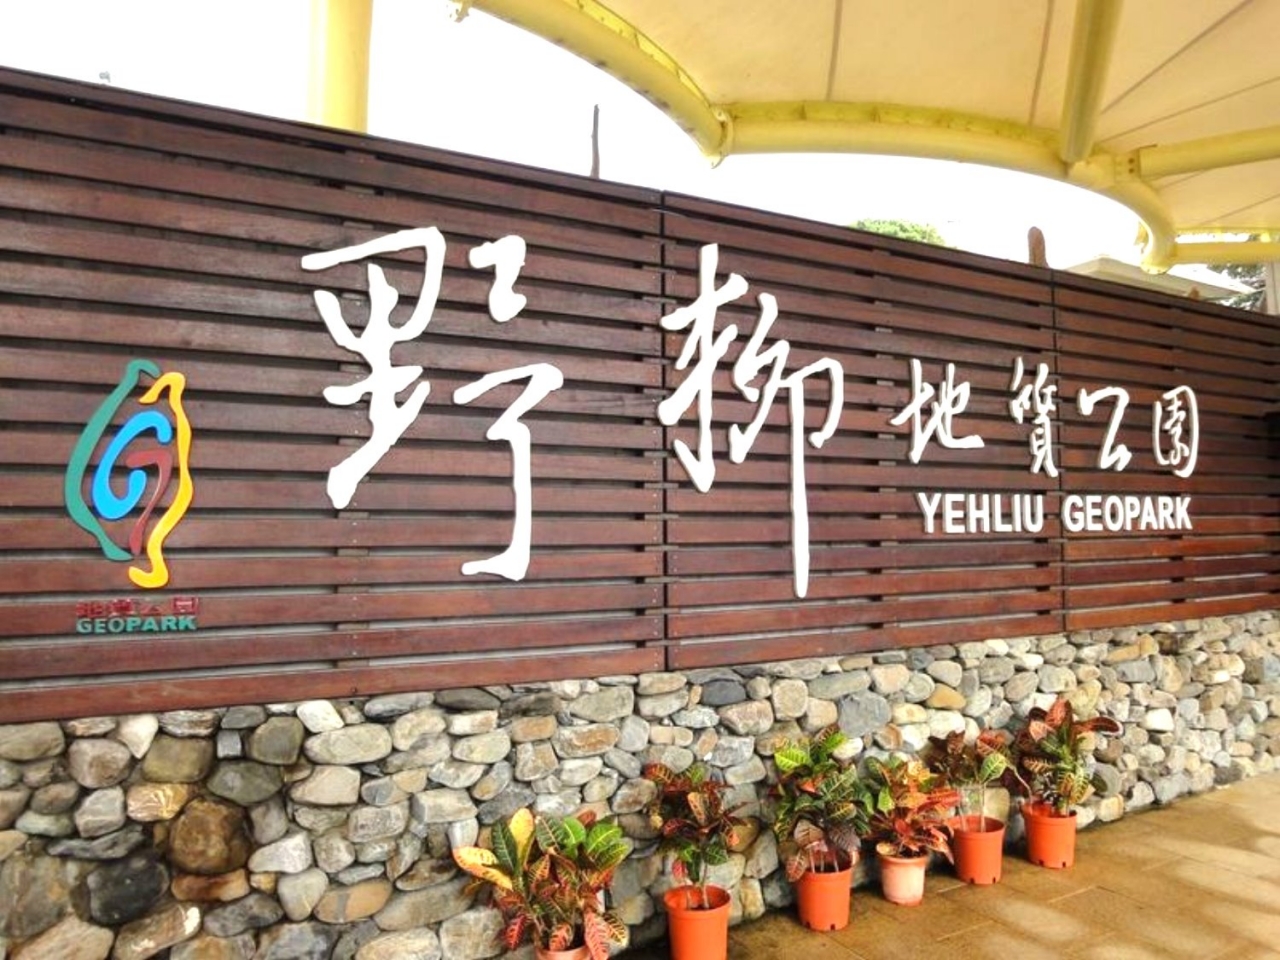 yehliu-geopark-taipei-attractions-of-color-fun-inn